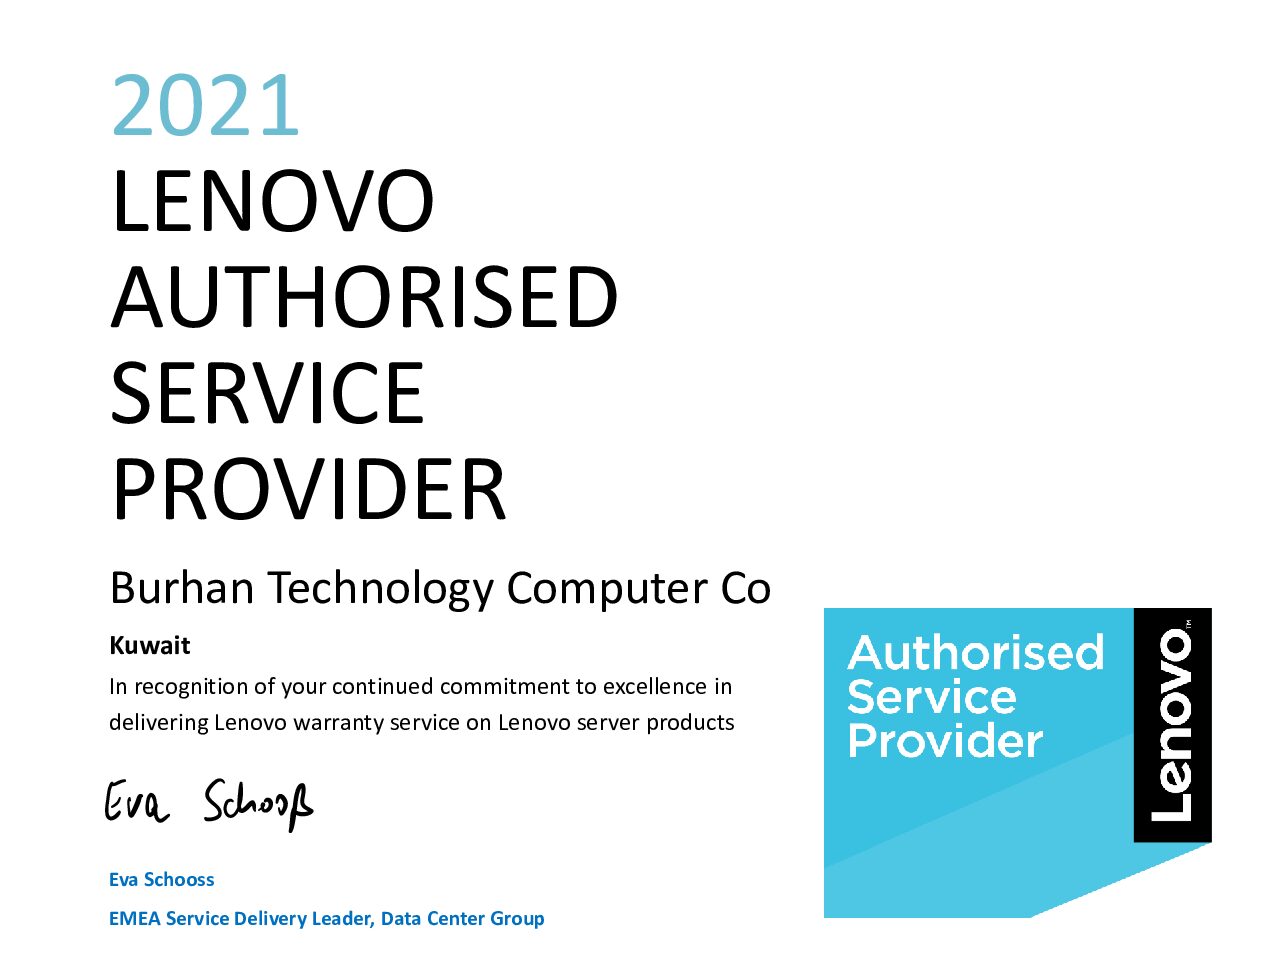 Burhantec becomes Lenovo Authorised Service Provider 2021 in Kuwait